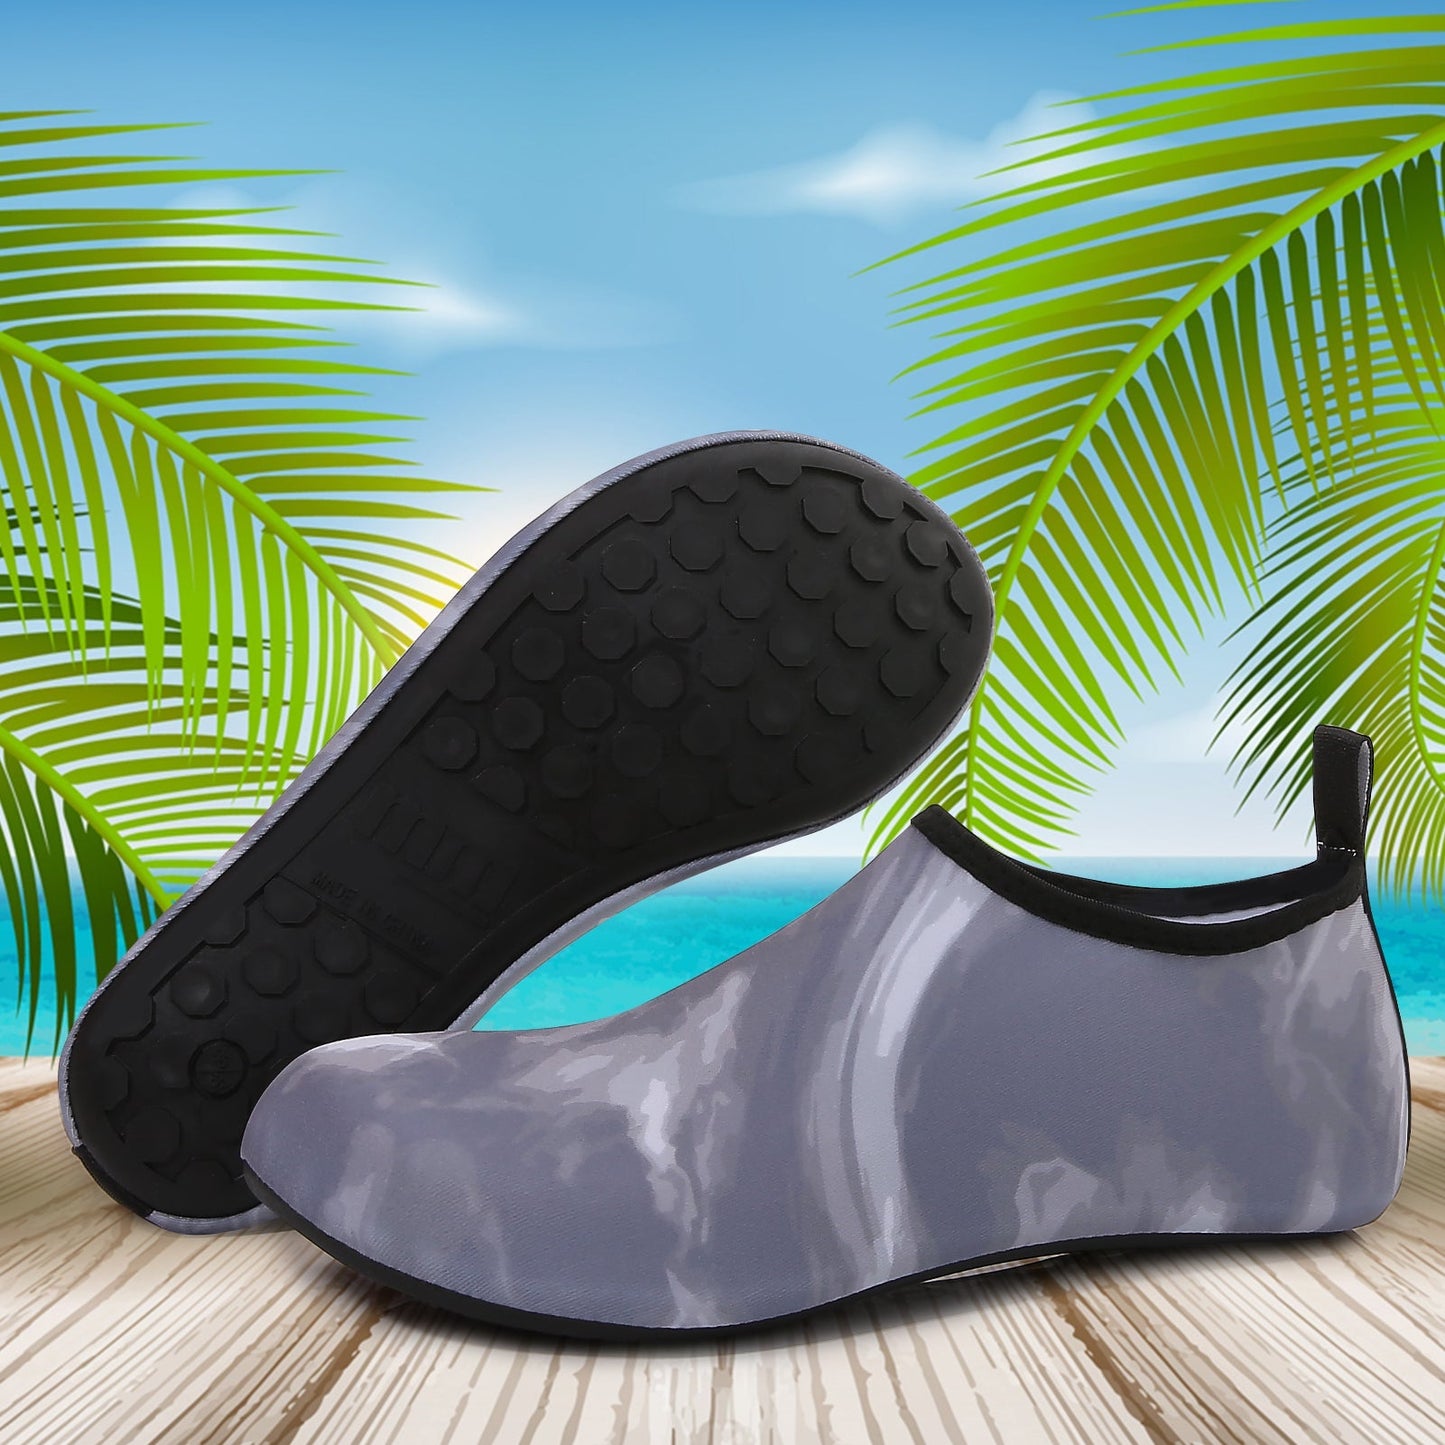 Men and Women a Slip On Barefoot Quick-Dry Beach Aqua Yoga Water Shoes (Fog/Grey)